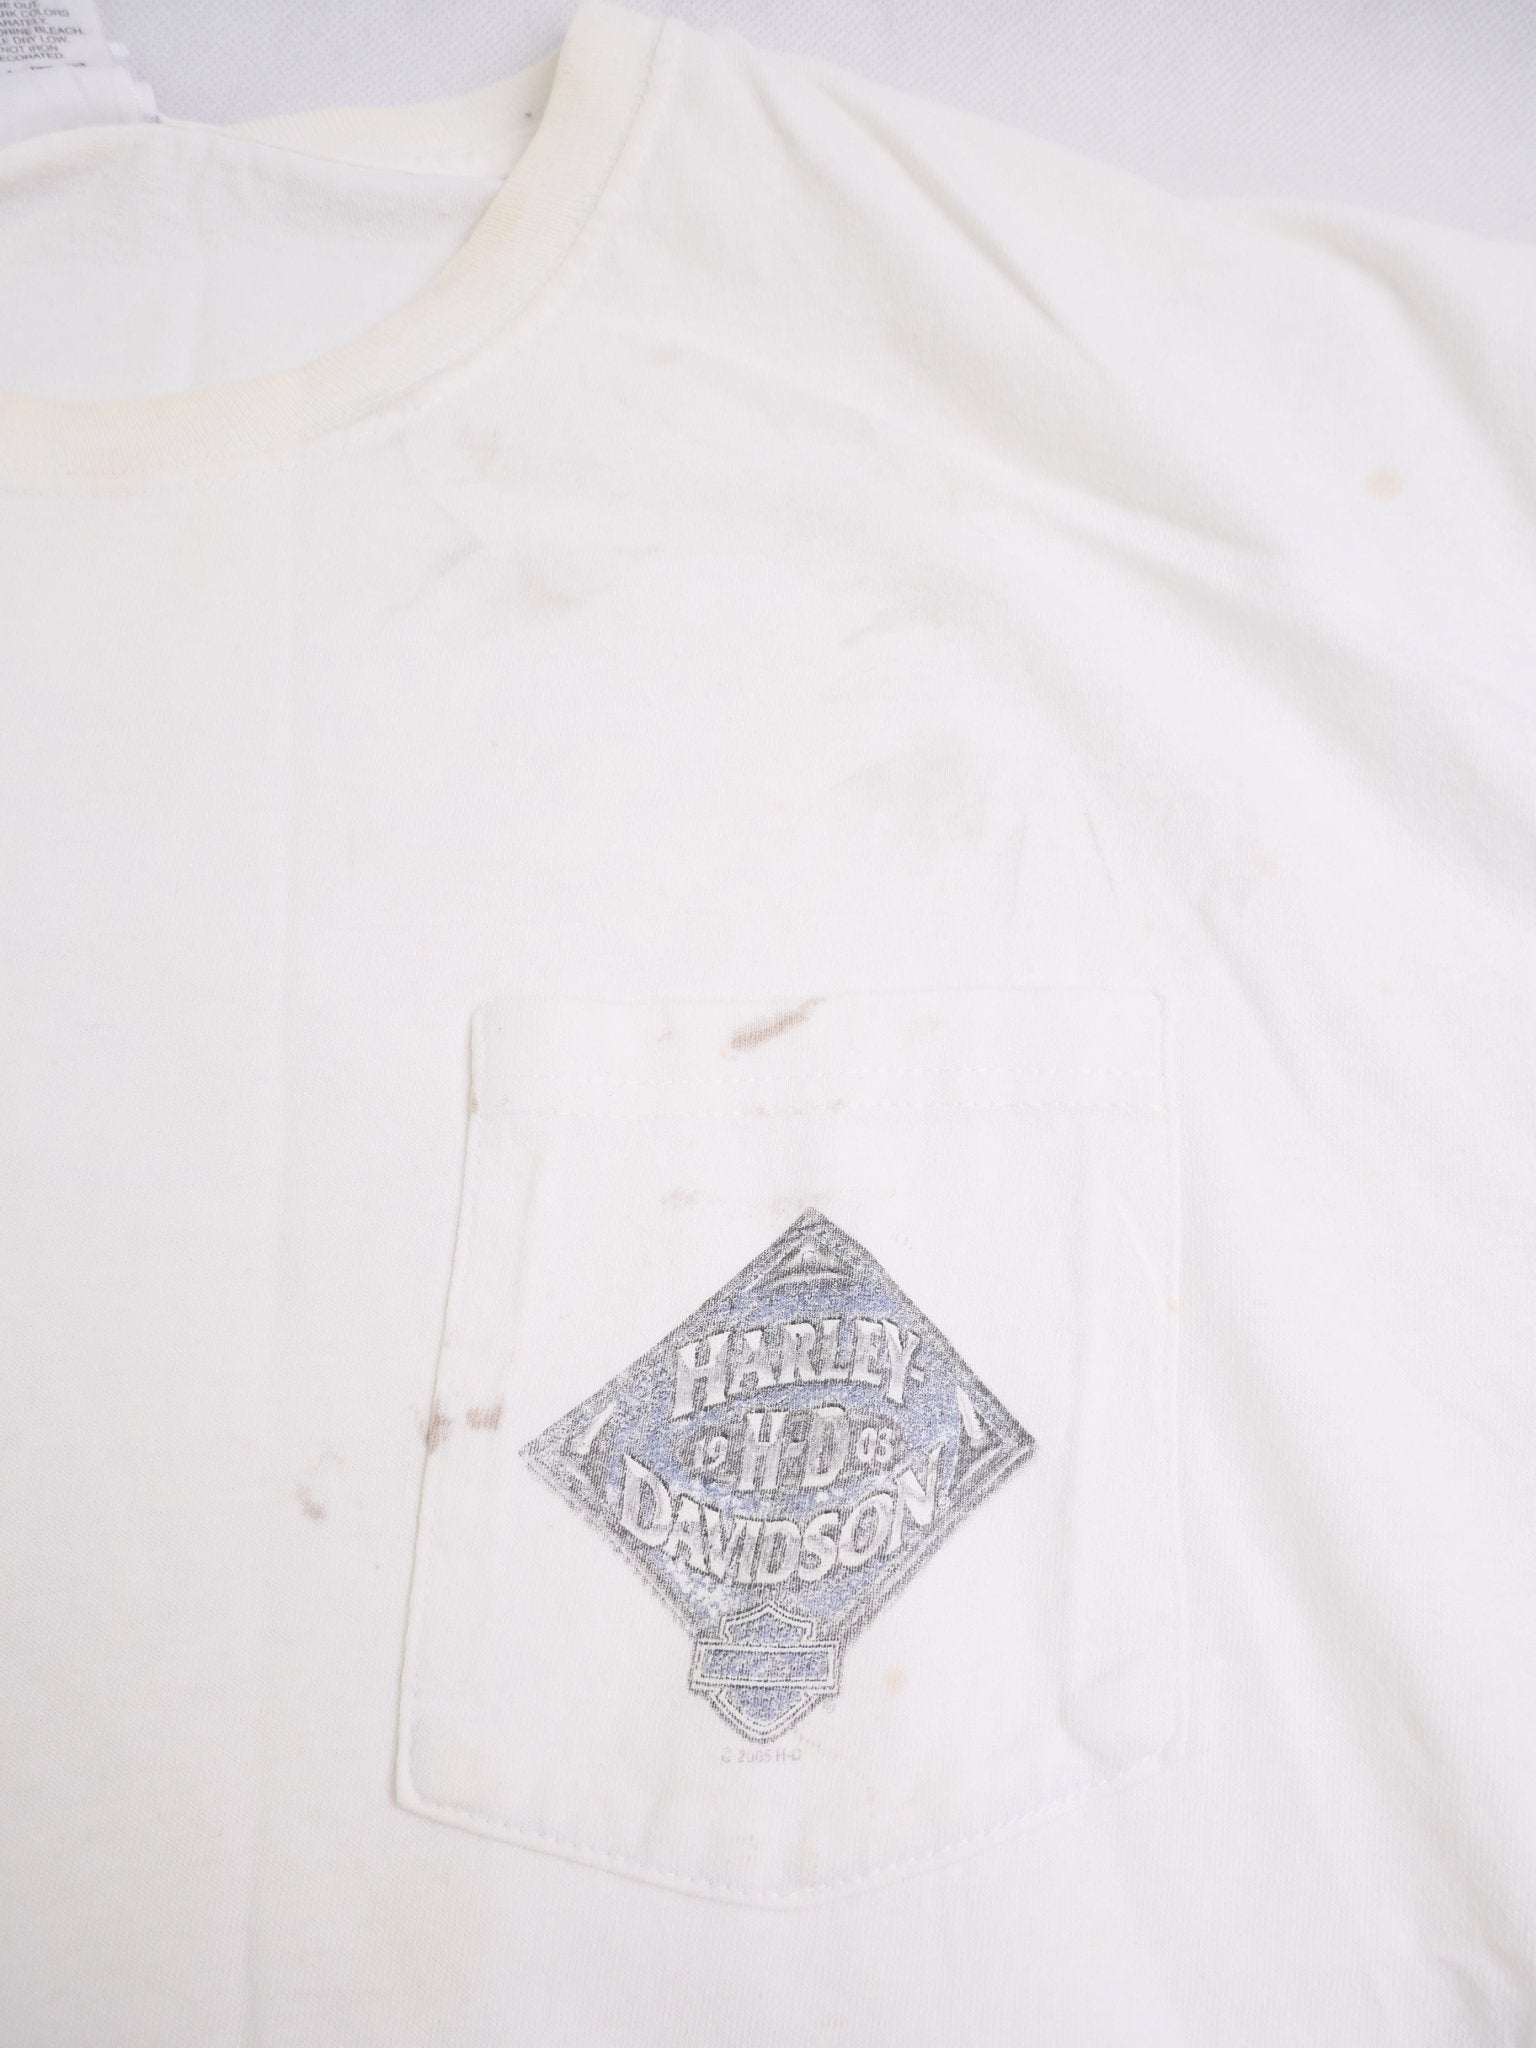 harley printed graphic white Vintage Shirt - Peeces